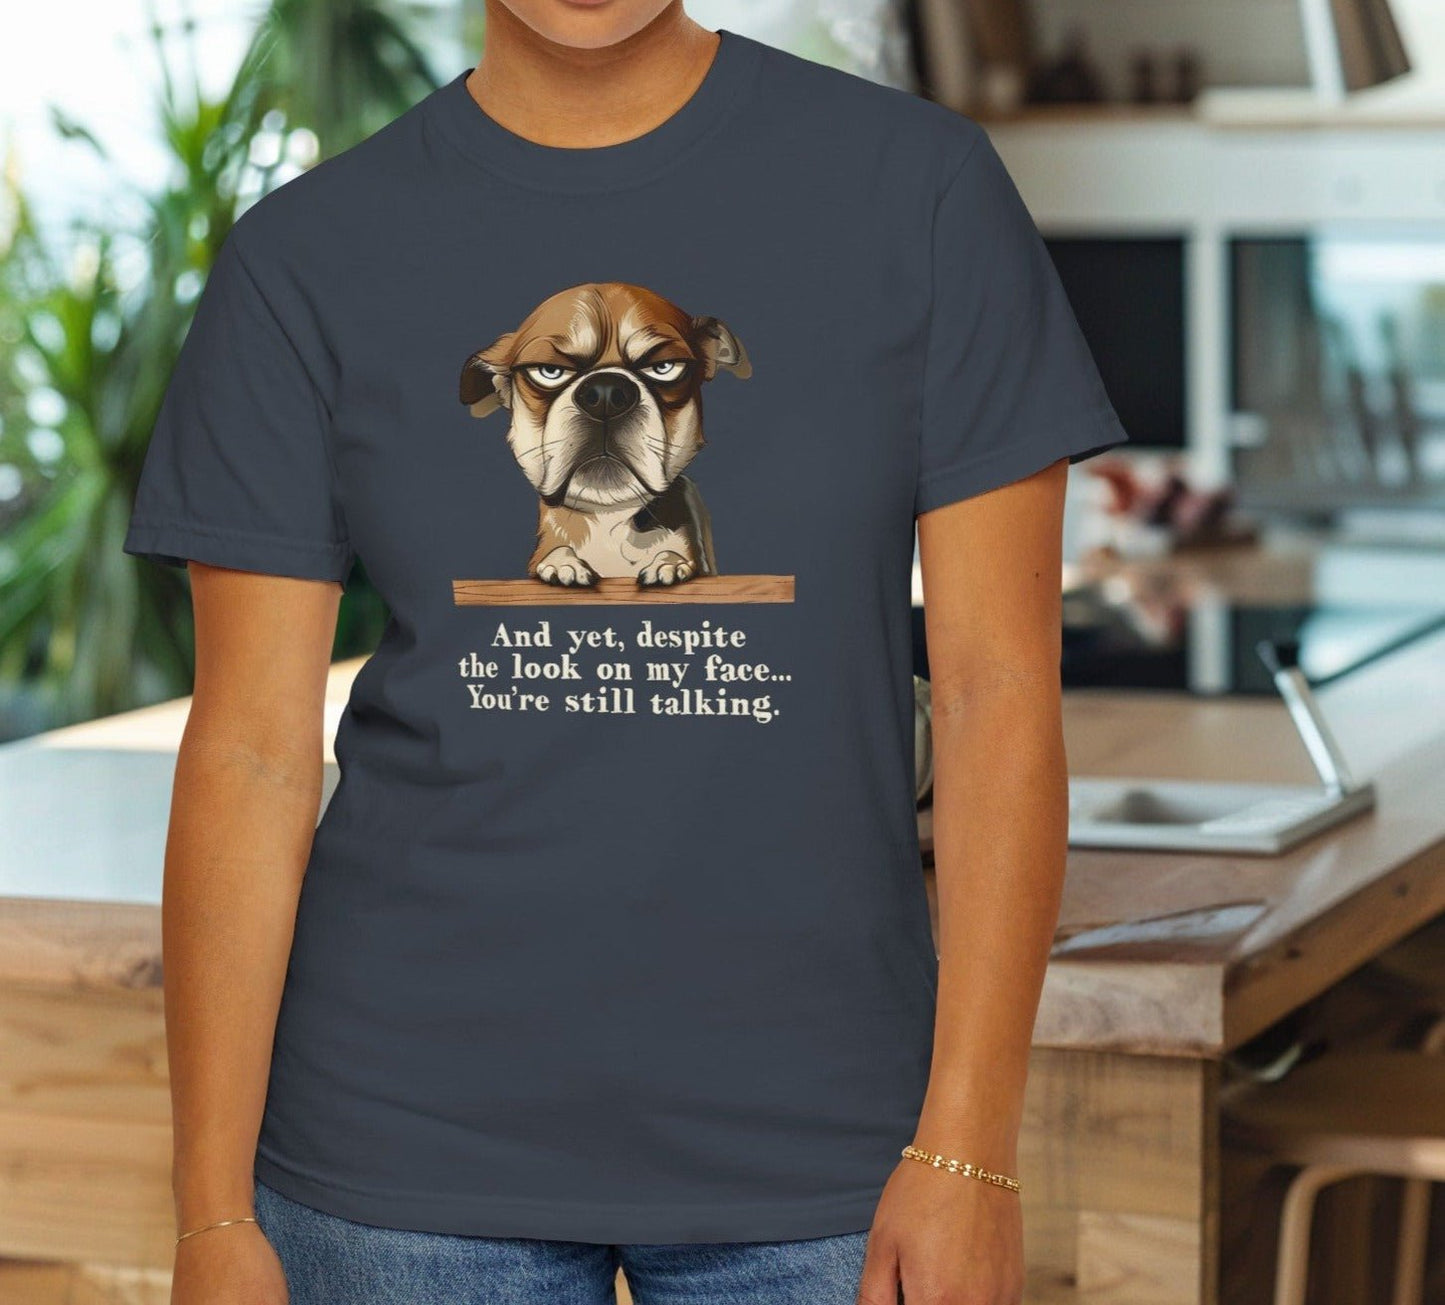 Funny Cute Dog T-shirt, Sarcastic Cartoon Dog Graphic Print, Unique Art for Dog Lover - FlooredByArt